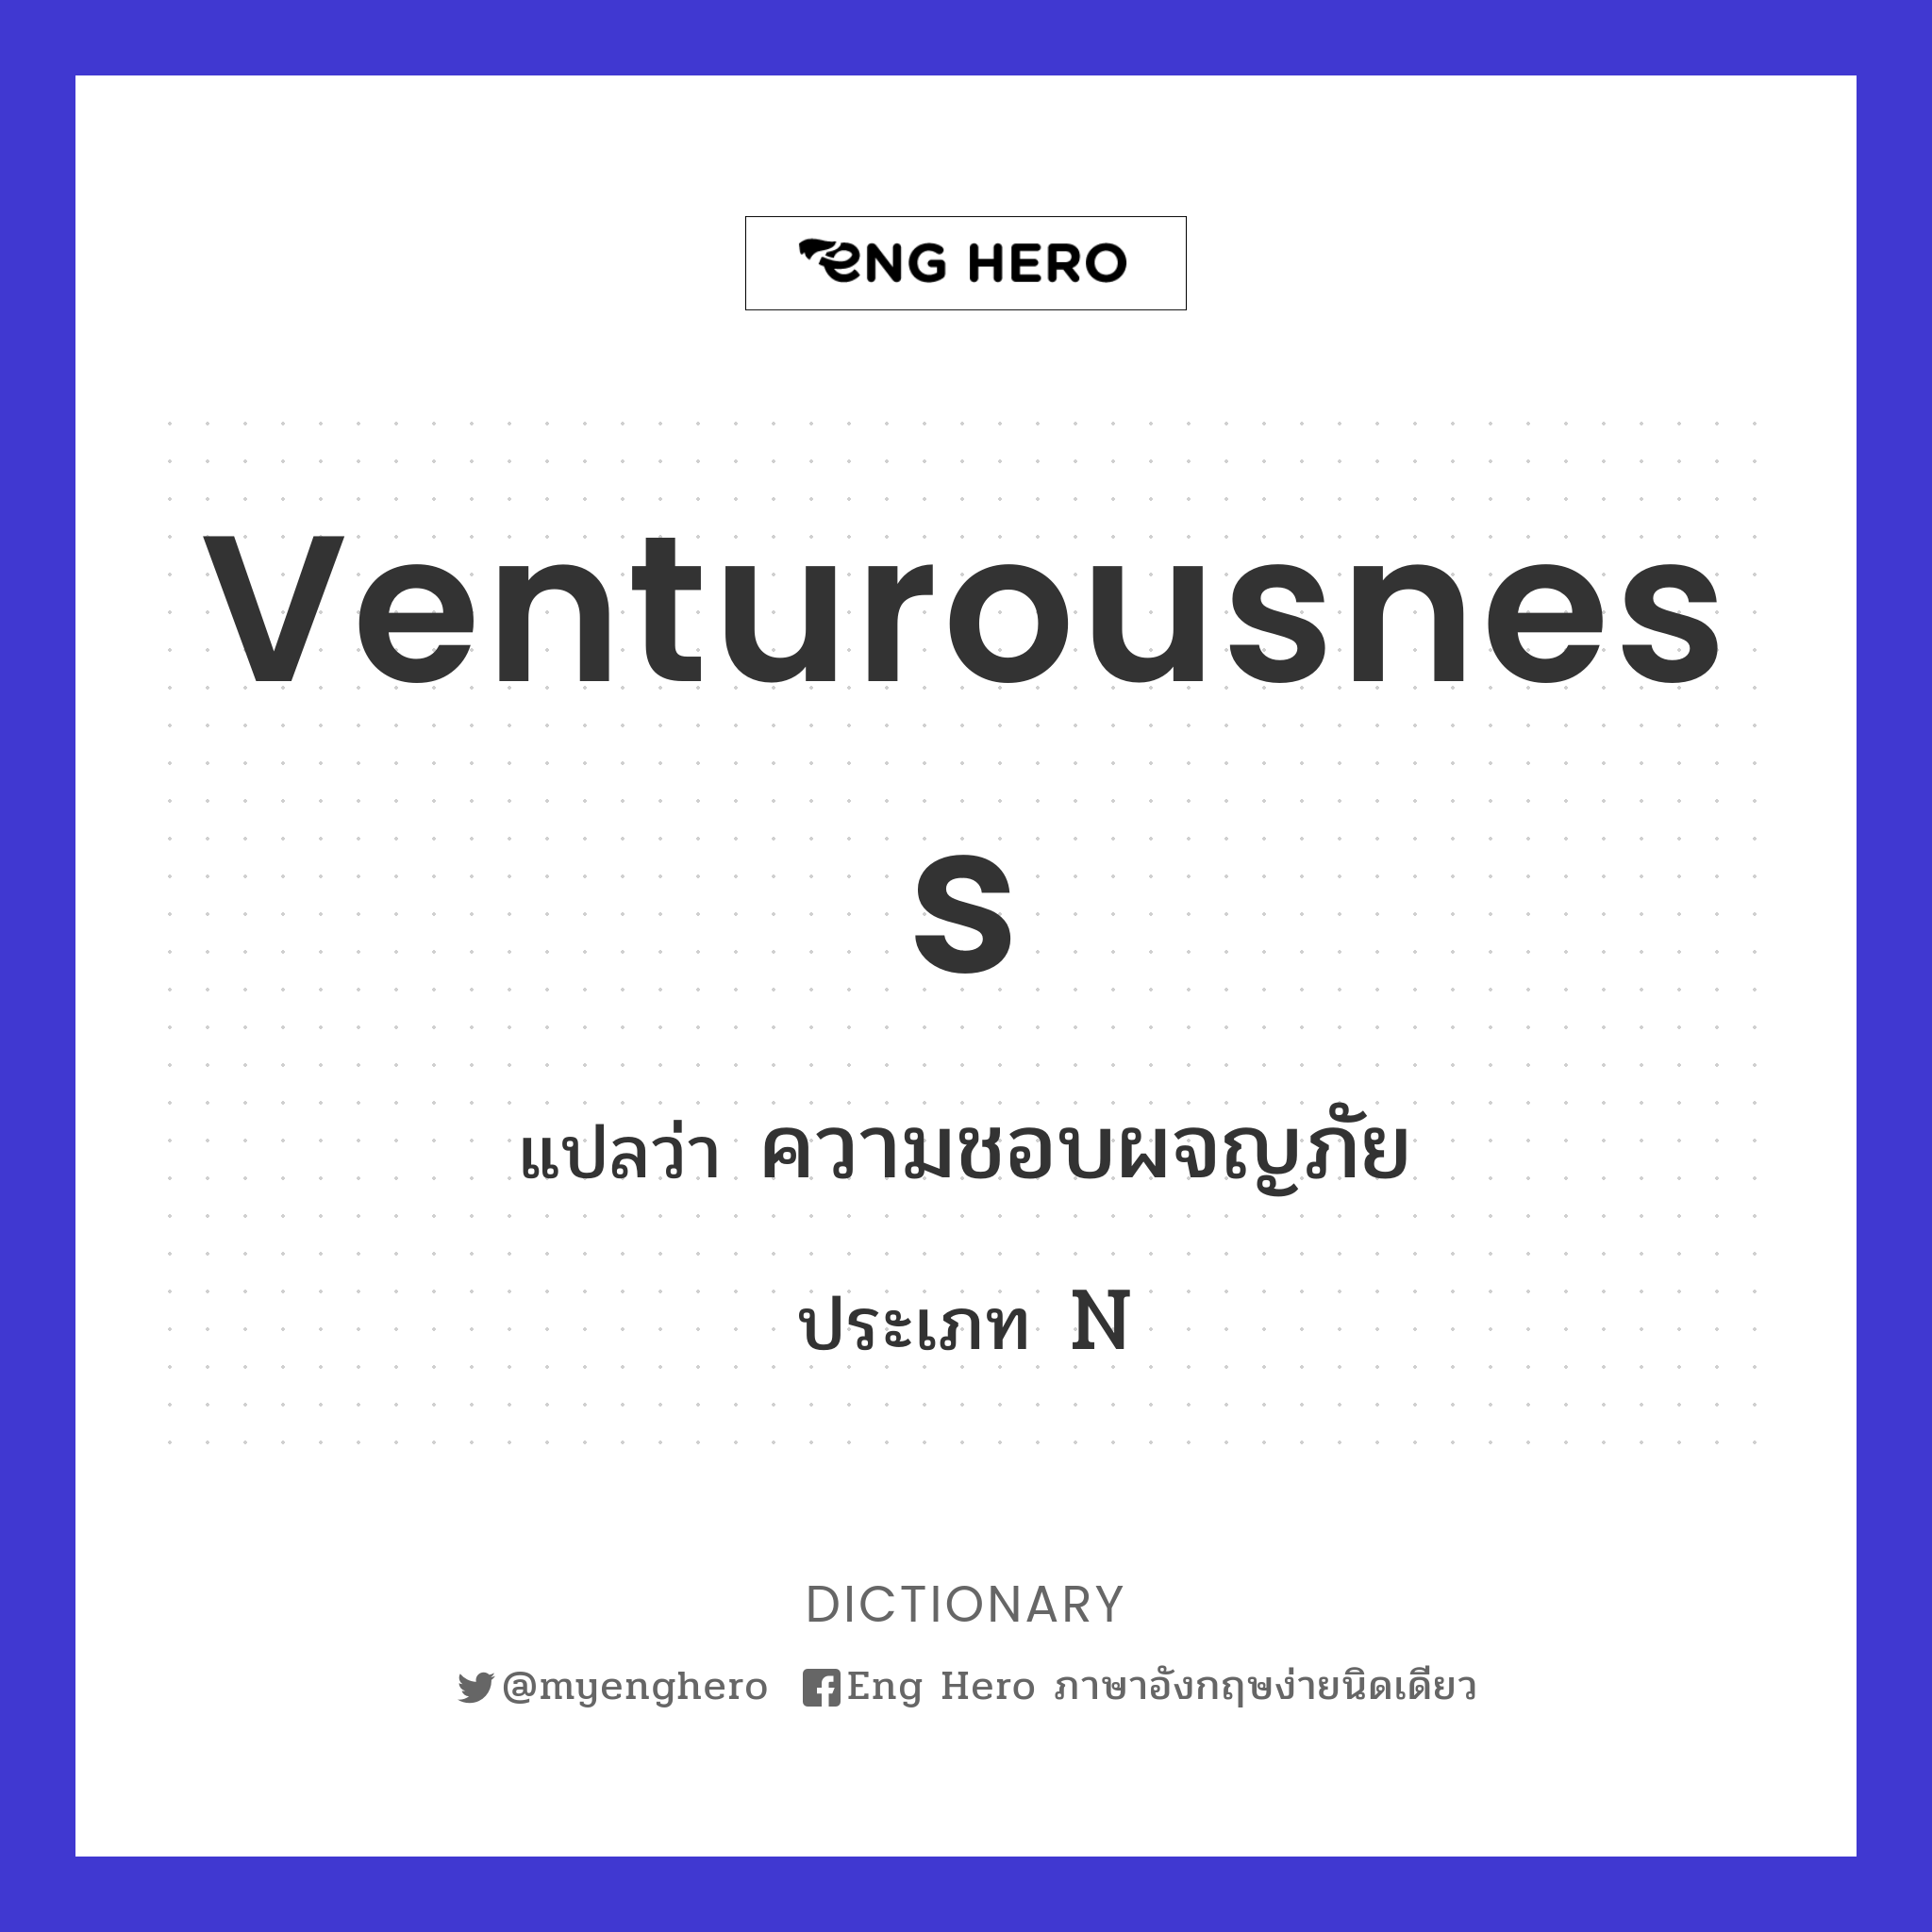 venturousness